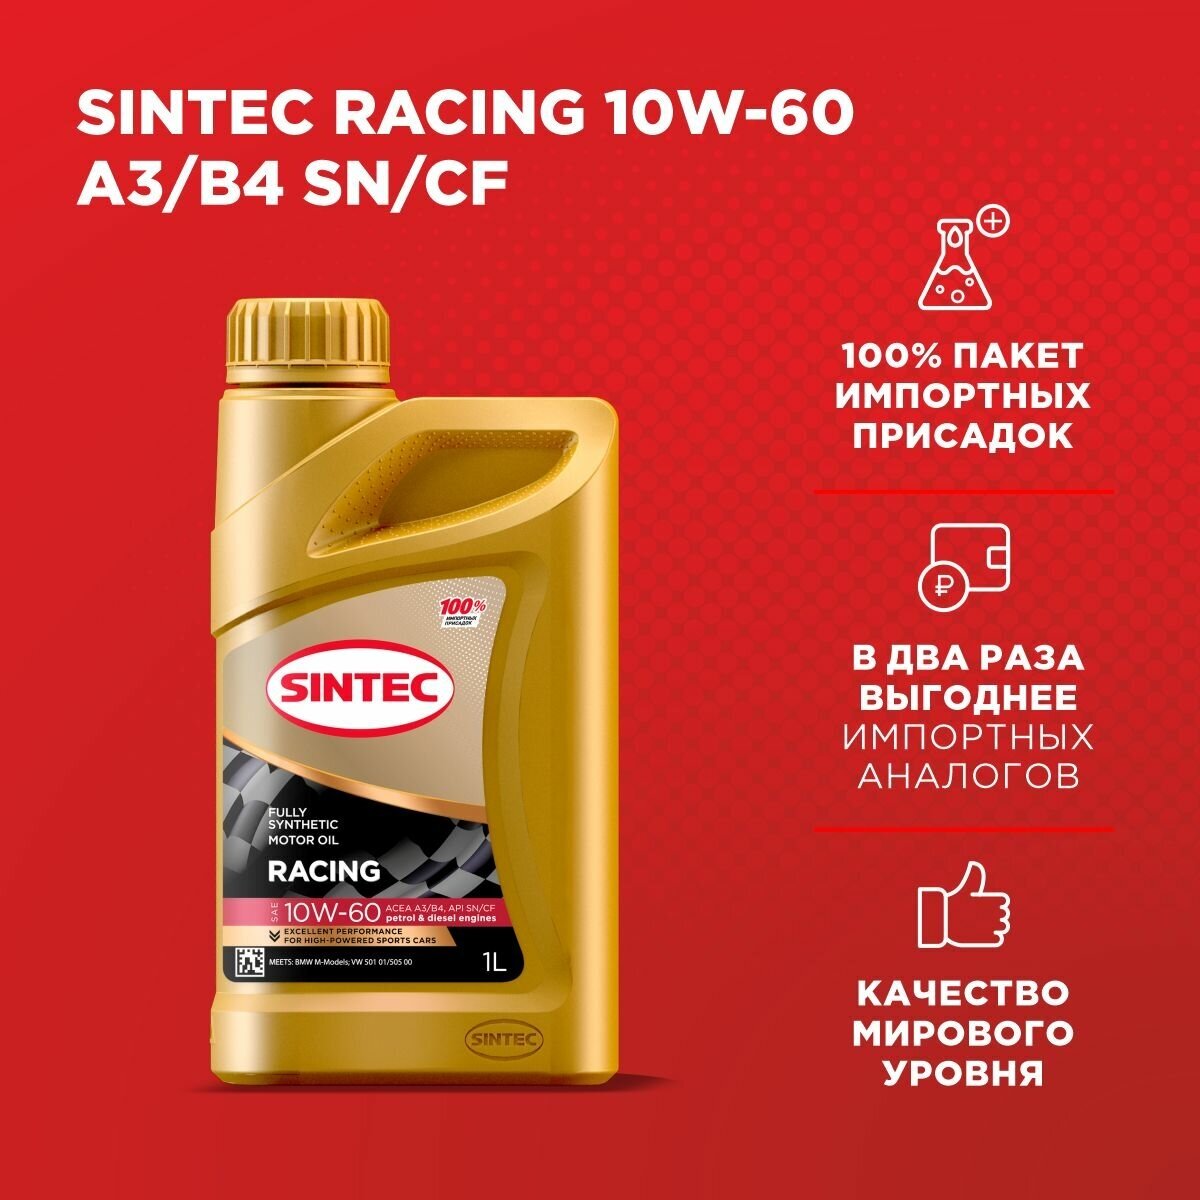 Sintec Racing 10W-60 A3/B4 SN/CF 1л (999842)